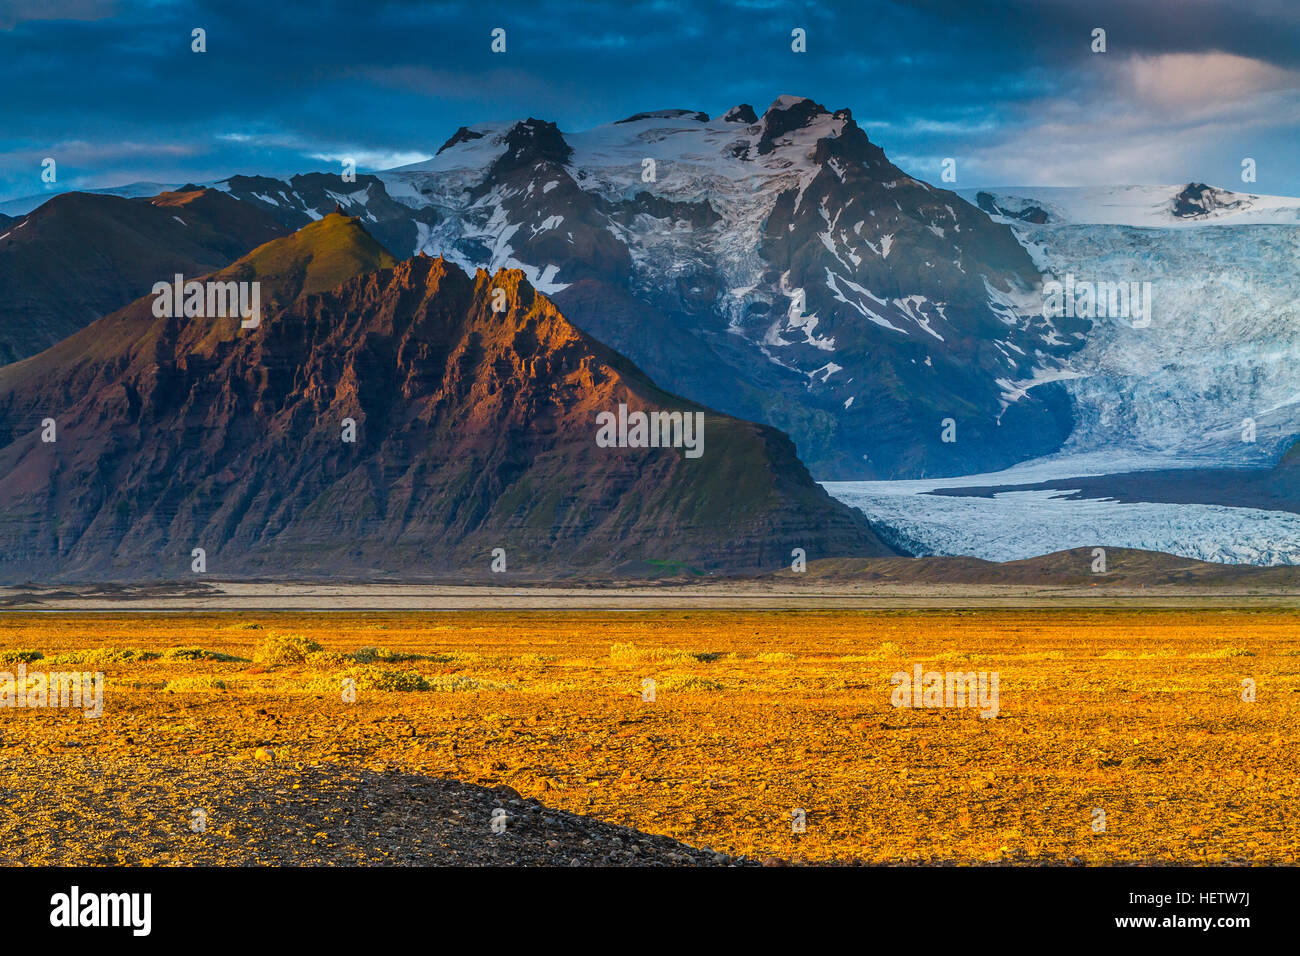 Mountain landscape in a tundra area. Stock Photo